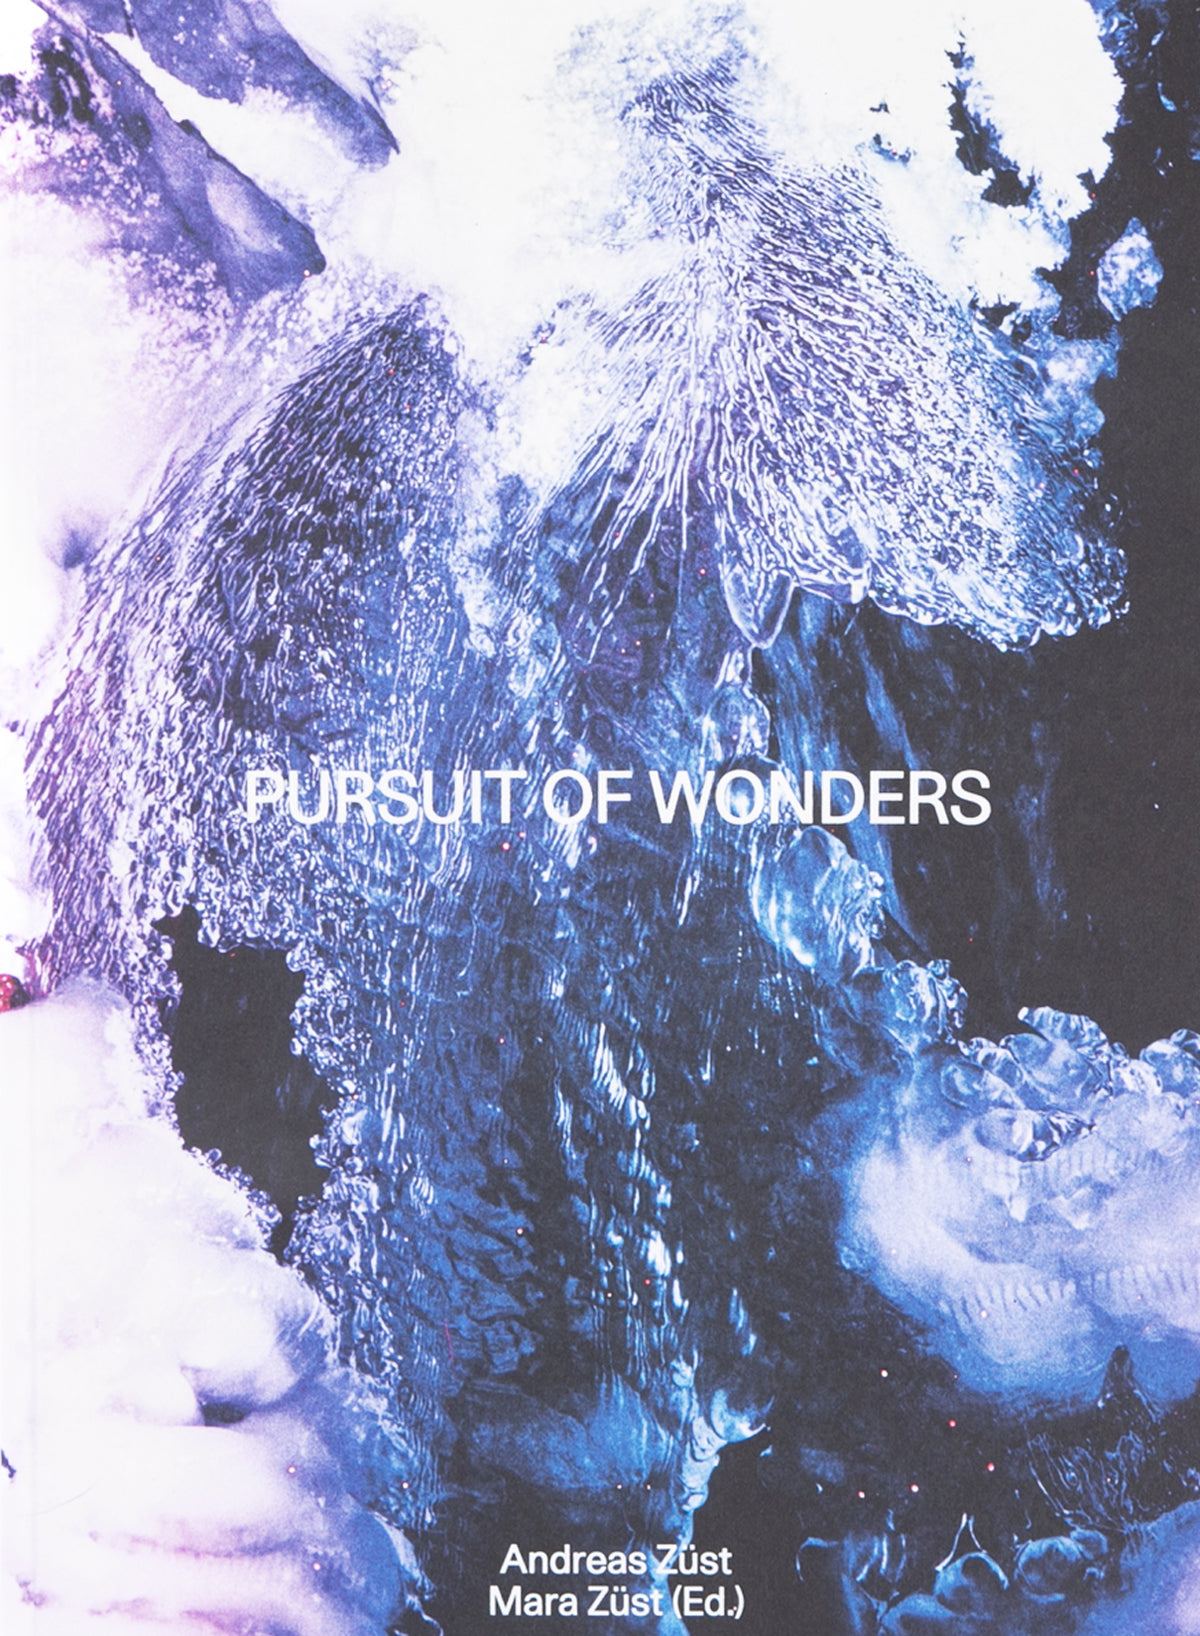 Pursuit of Wonders